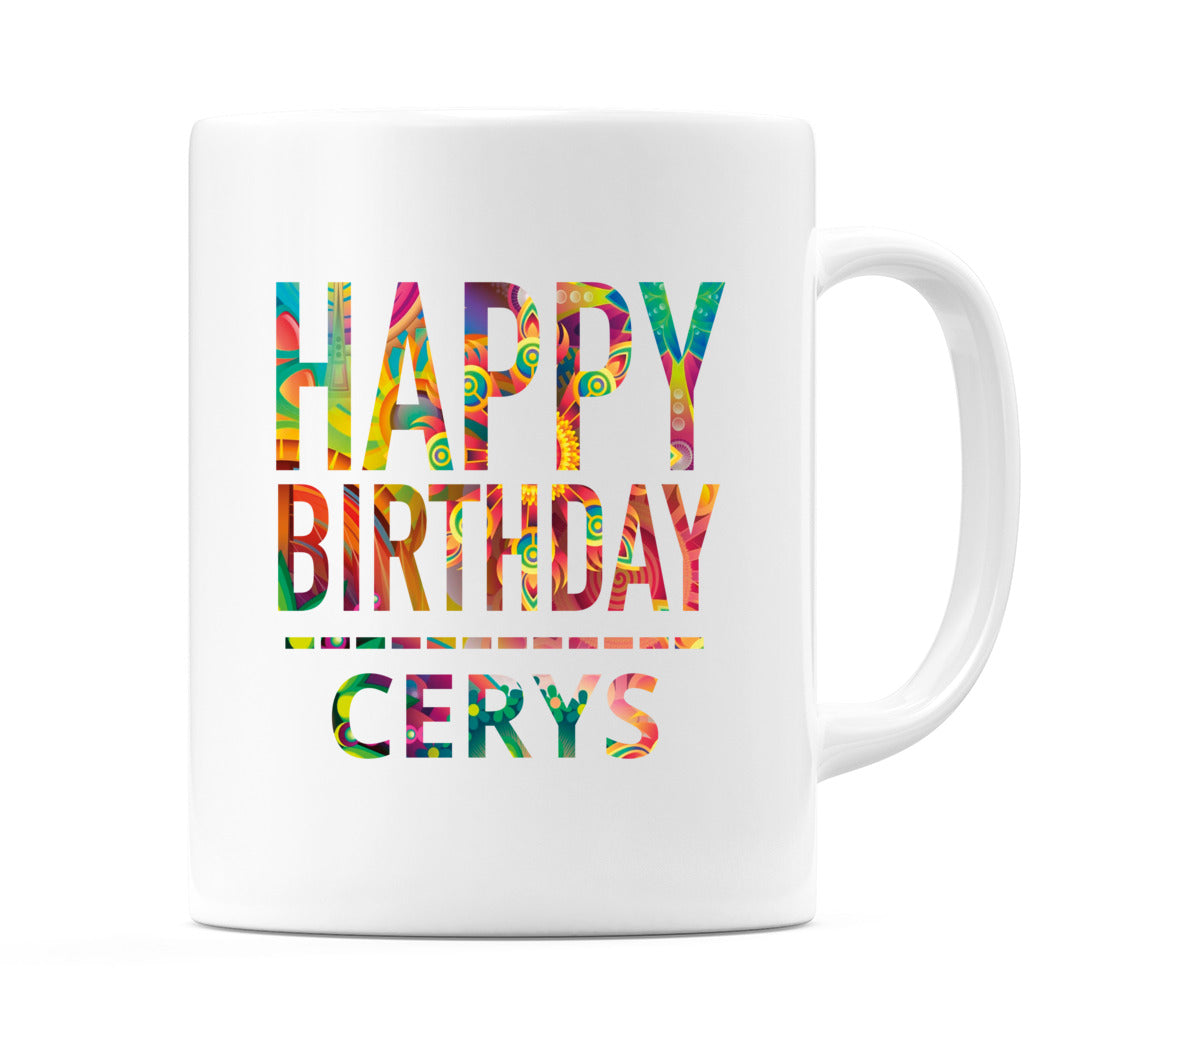 Happy Birthday Cerys (Tie Dye Effect) Mug Cup by WeDoMugs